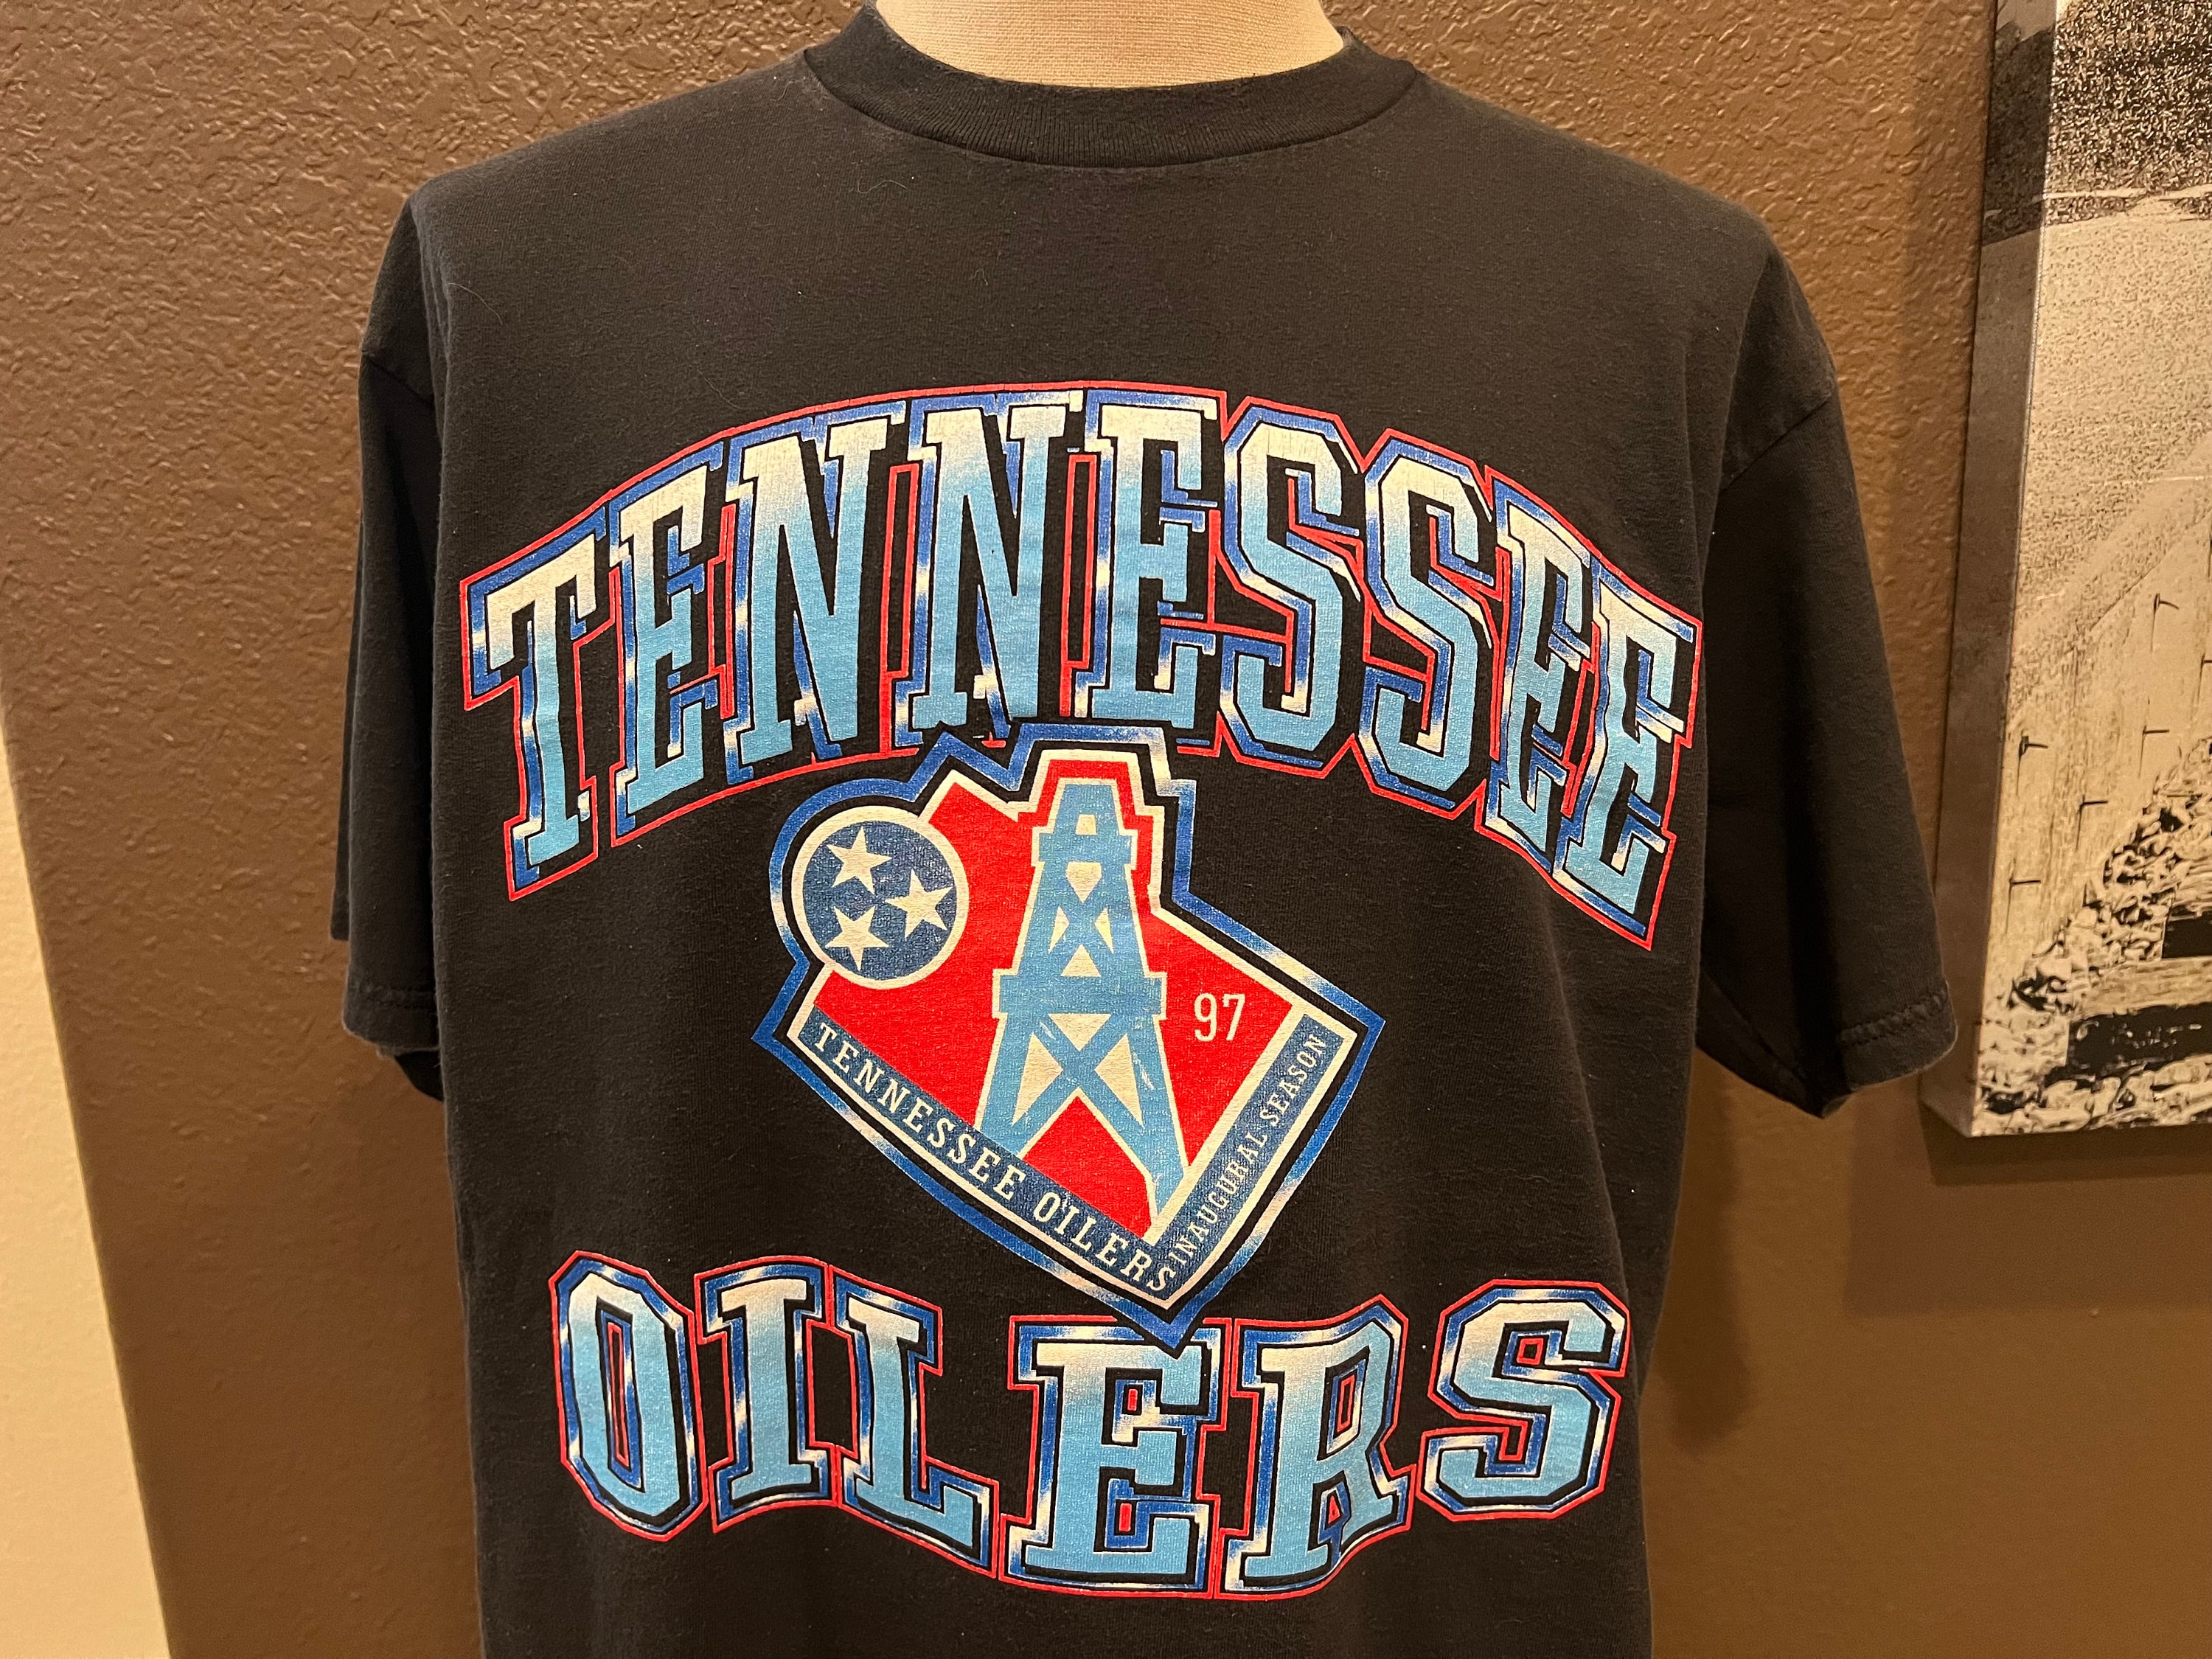 Houston Oilers Vintage Nfl Art Kids T-Shirt